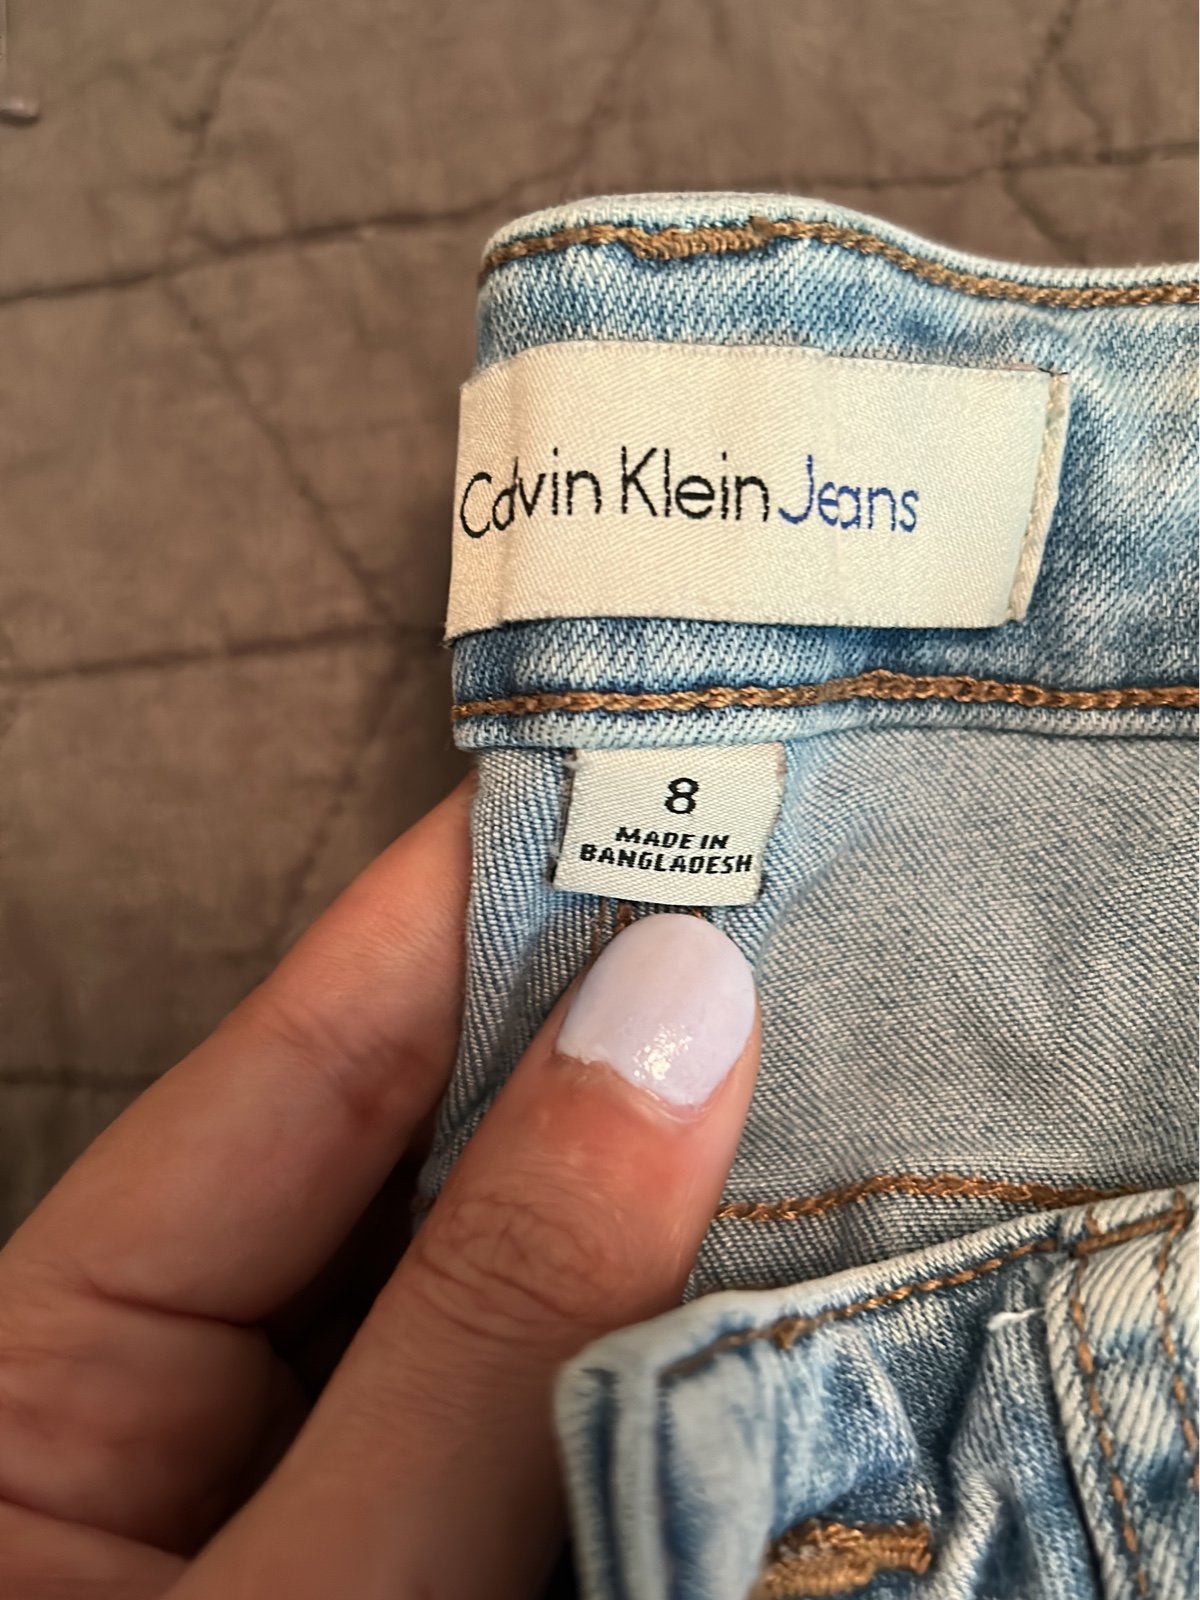 Cheap Calvin Klein Jeans PqzjBLVnw Great